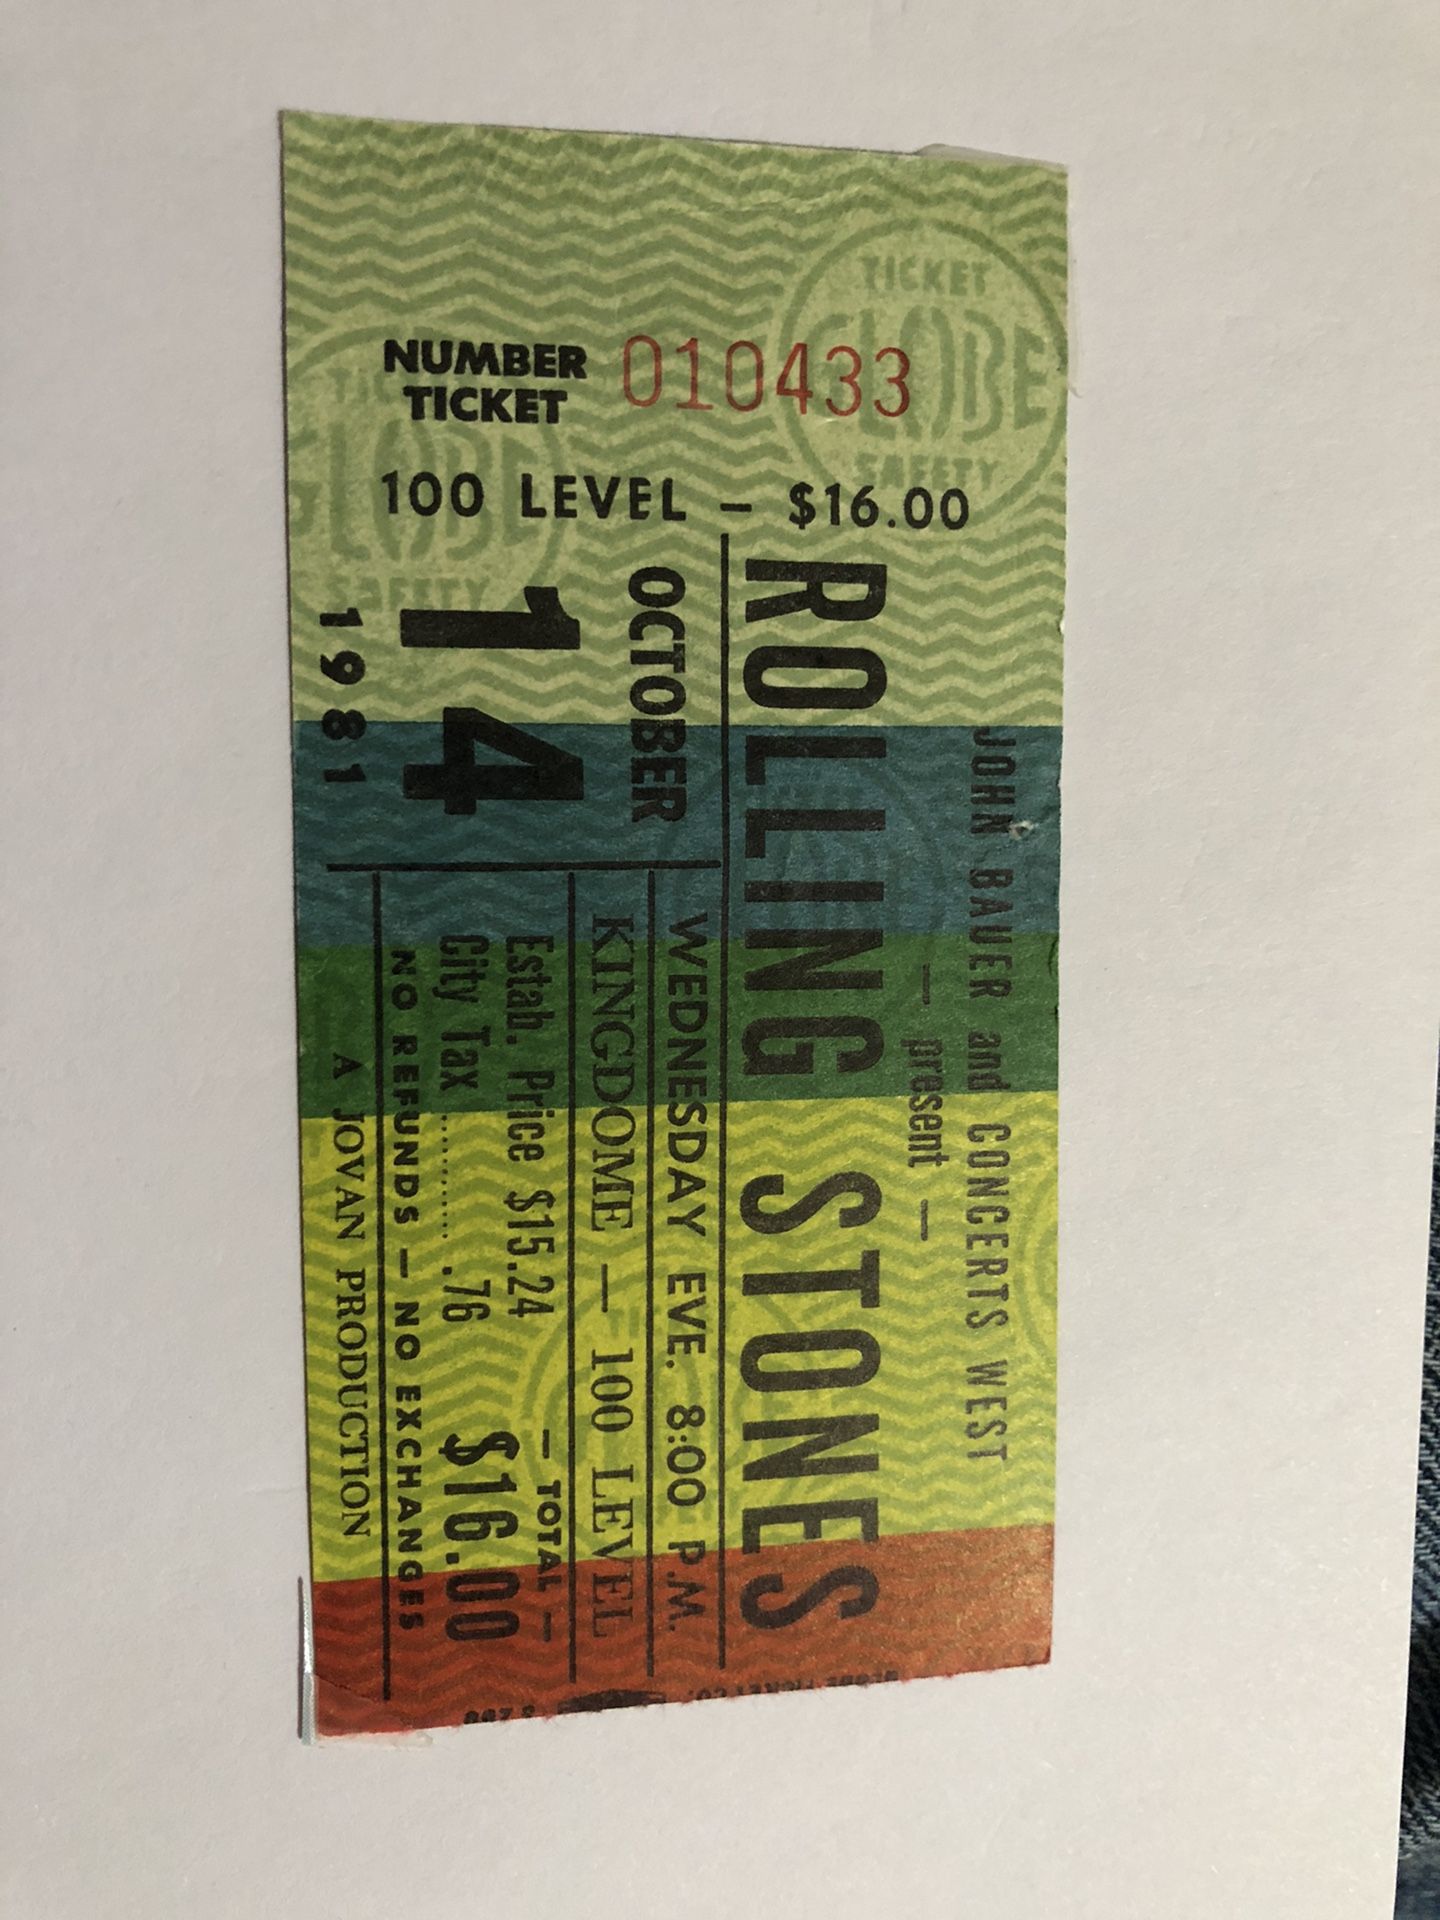 Vintage Rolling Stones concert ticket and brochure.